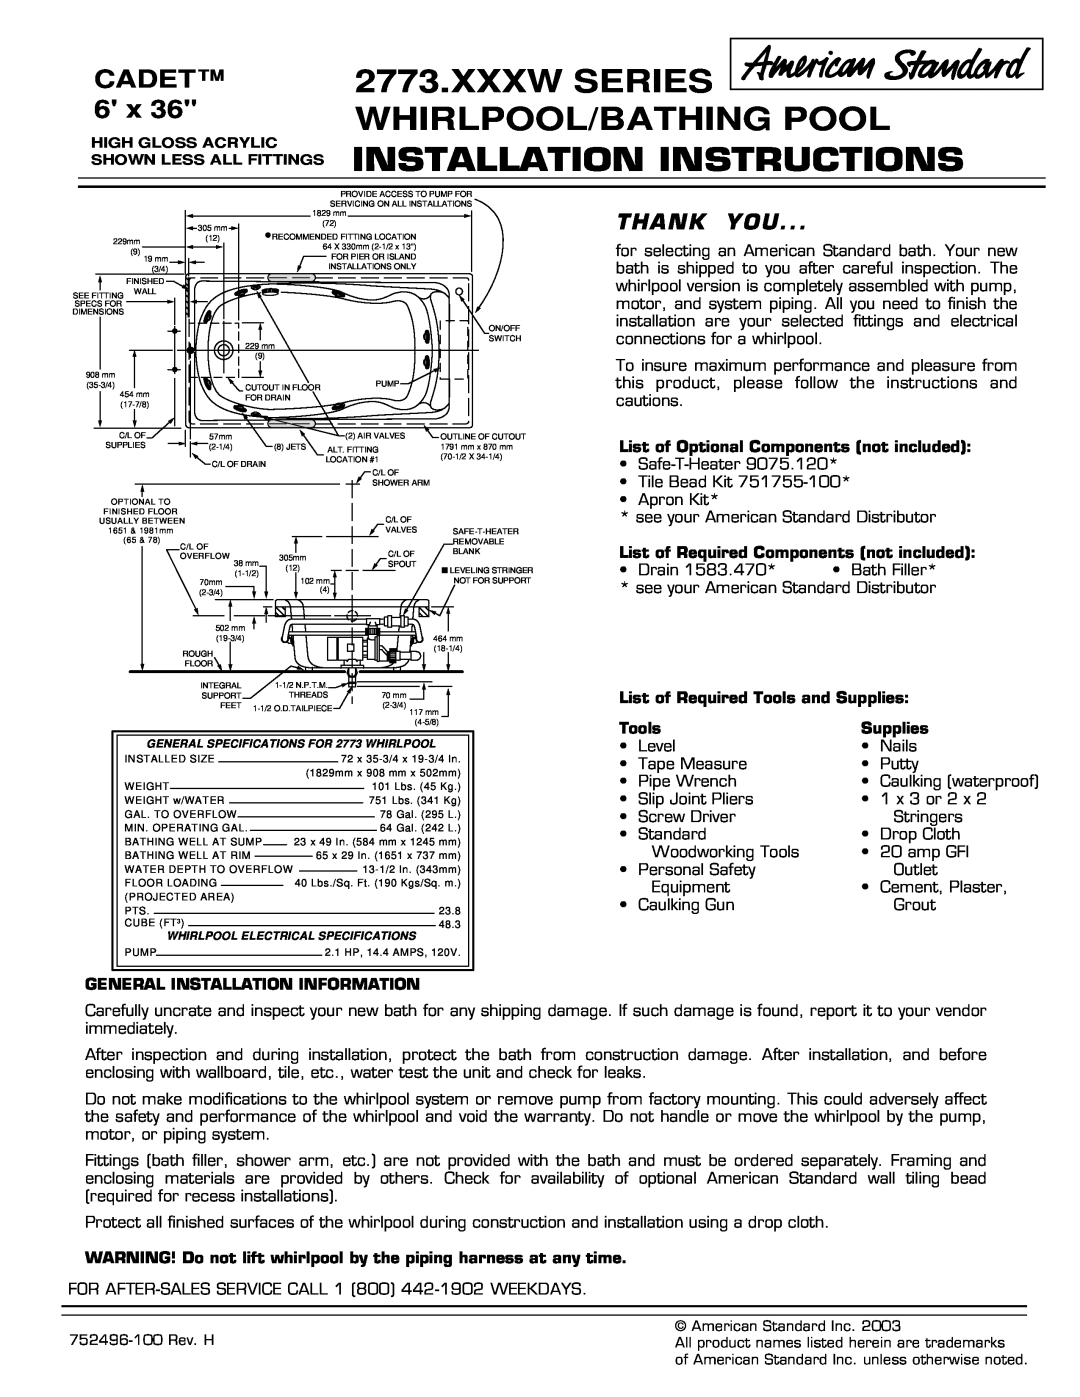 American Standard 2773.XXXW Series installation instructions Xxxw Series Whirlpool/Bathing Pool, Installation Instructions 